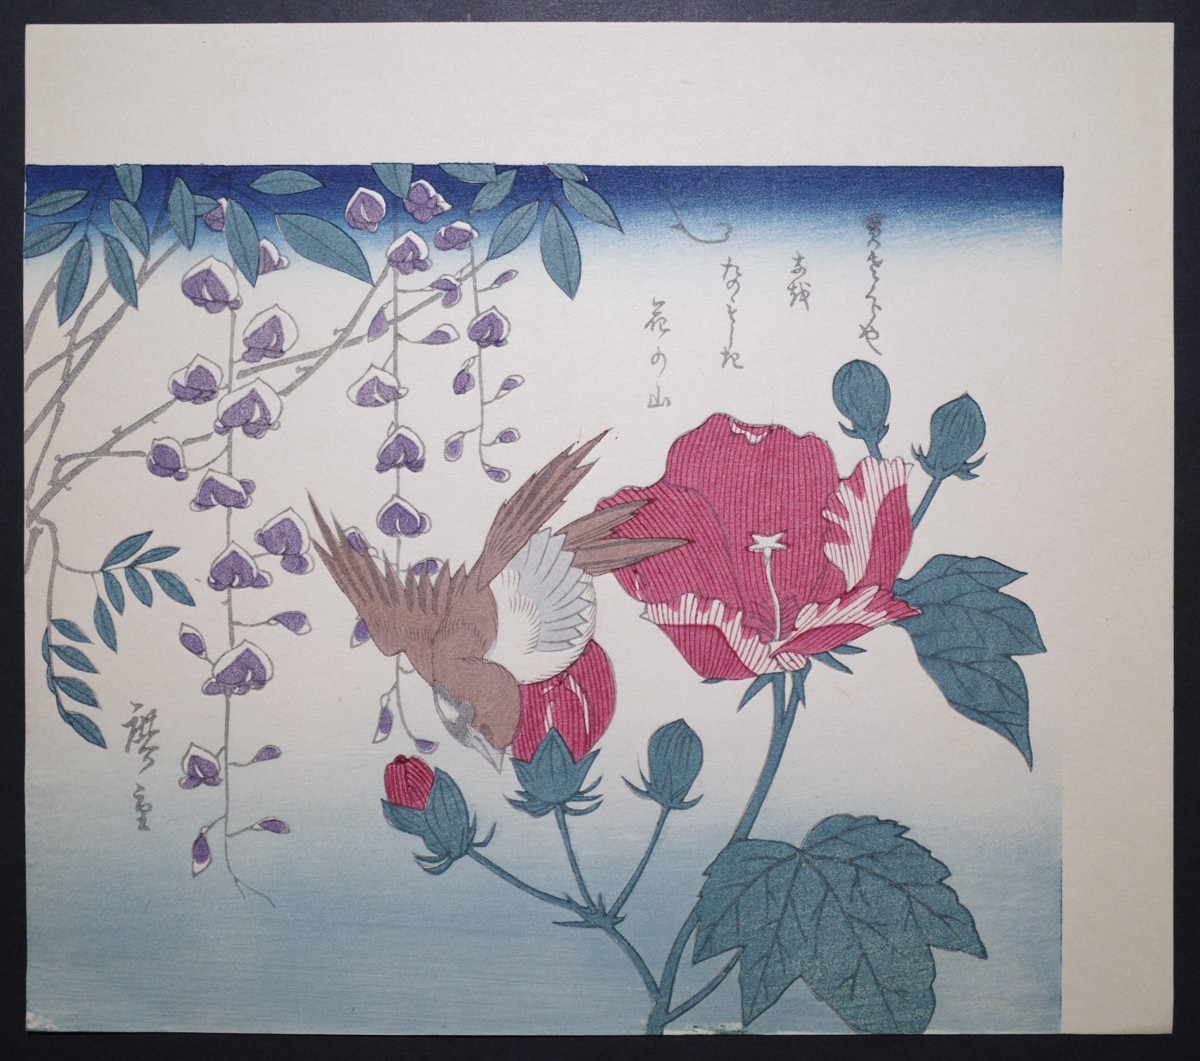 Utagawa Hiroshige [Sparrows, Wisteria, Poppy Flowers] ■ Kyoka Surimono Ukiyo-e Flowers and Birds Nishiki-e Woodblock Prints Surimono Antique Books Japanese Books Hiroshige Ukiyoe, Painting, Ukiyo-e, Prints, others